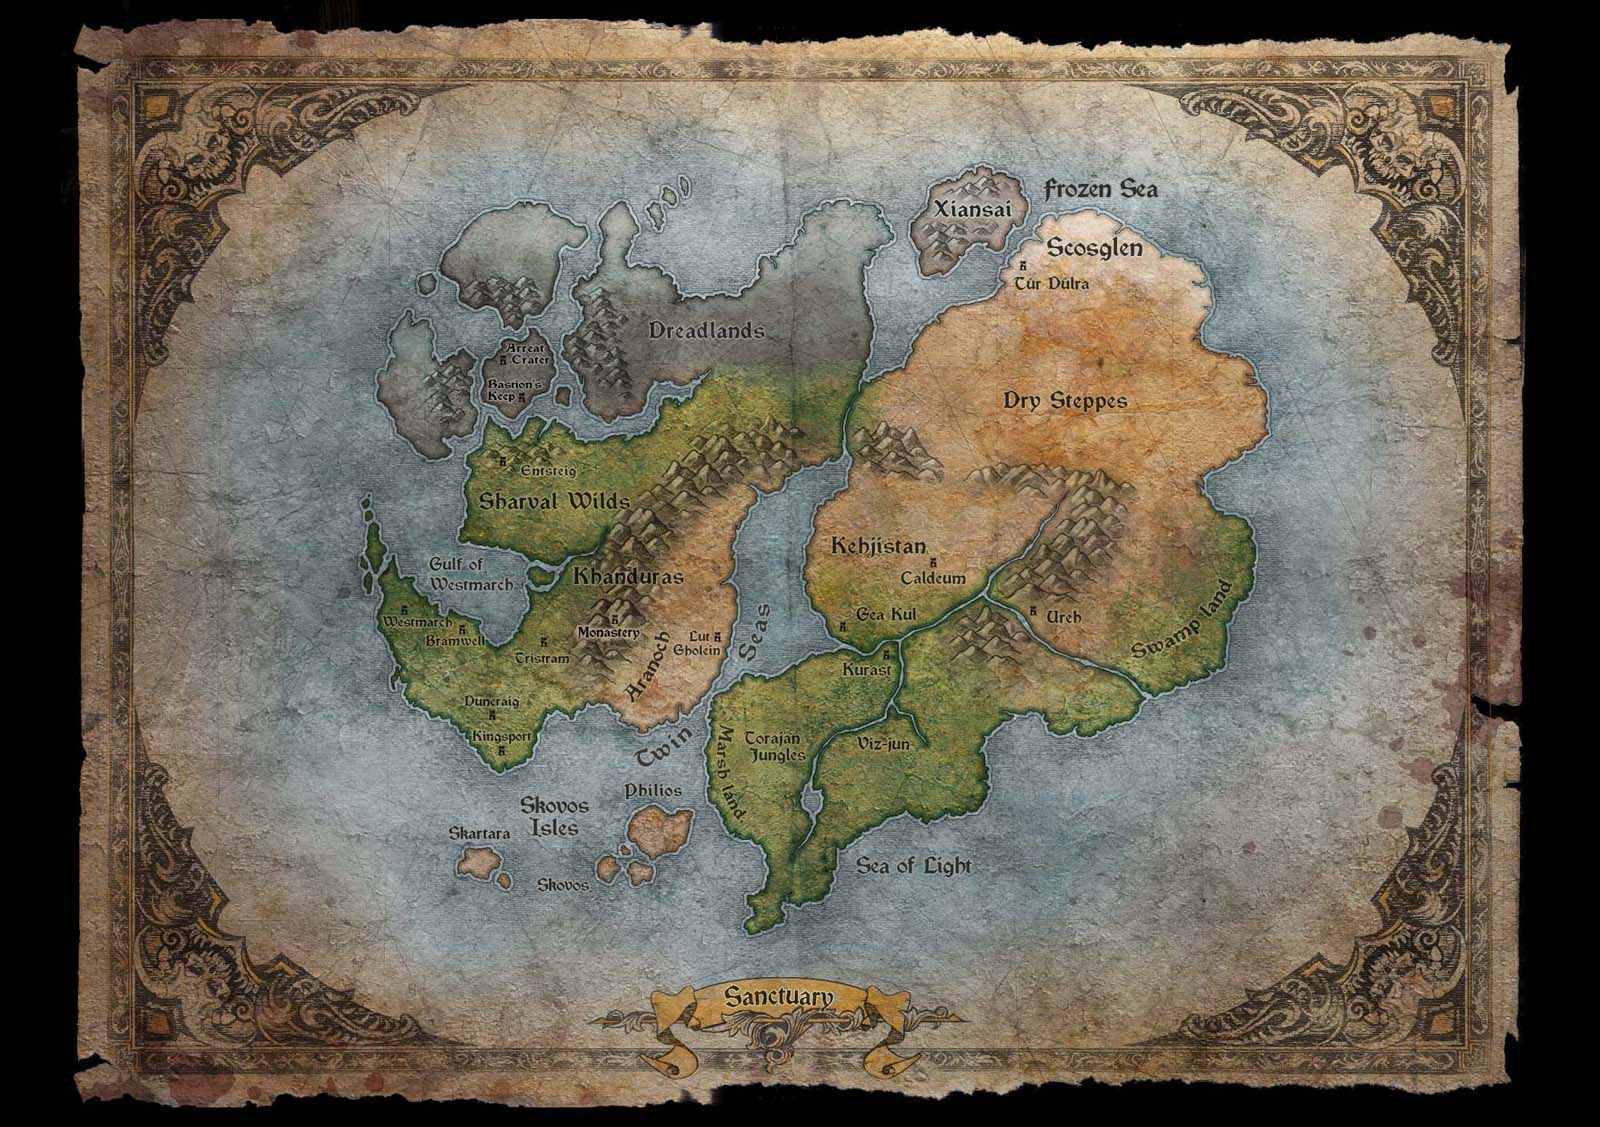 Diablo3worldmap.jpg